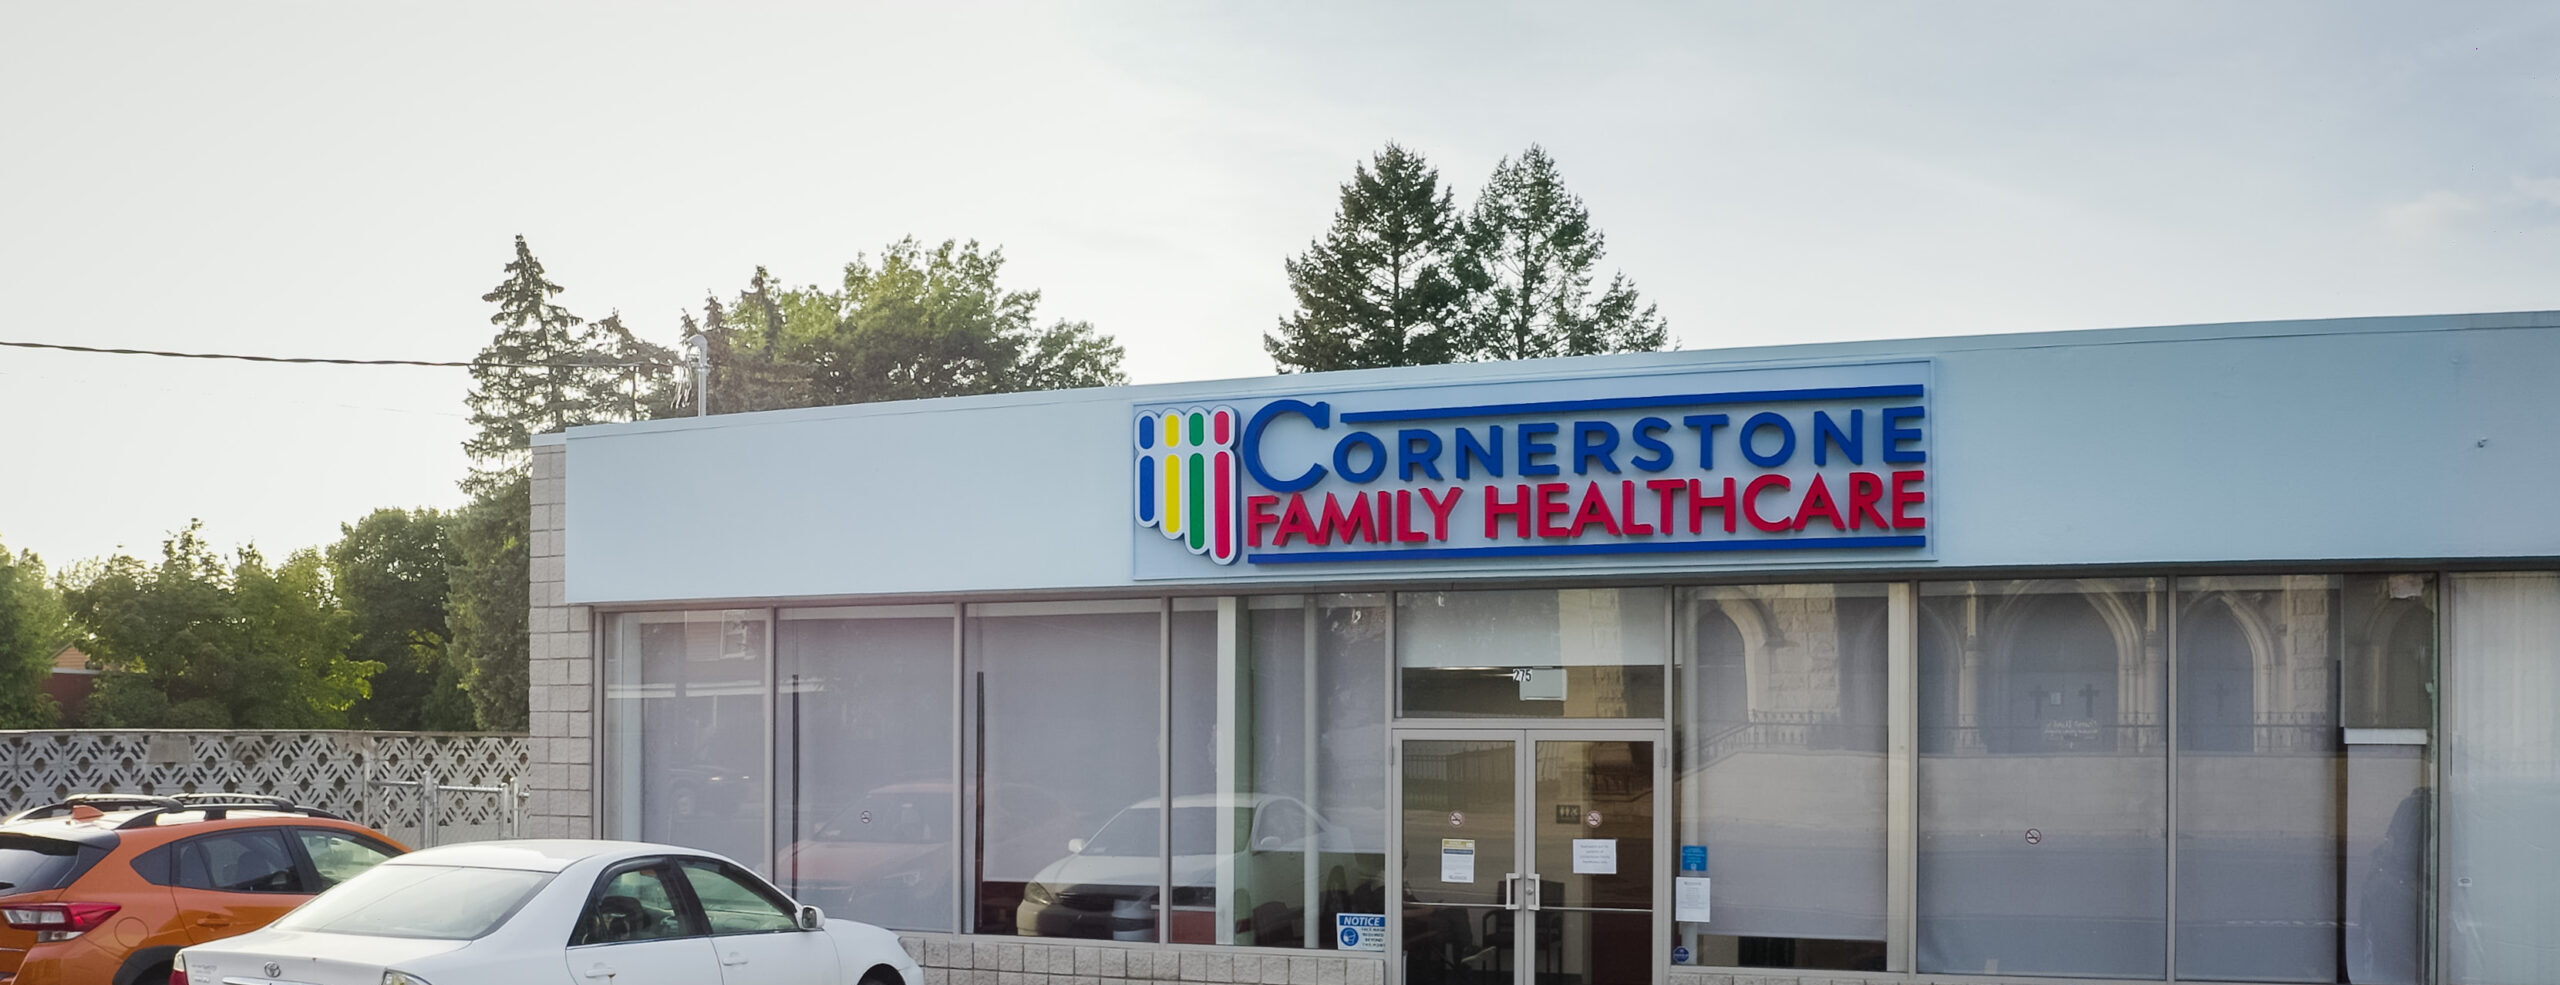 Cornerstone Family Healthcare - Chenango Street